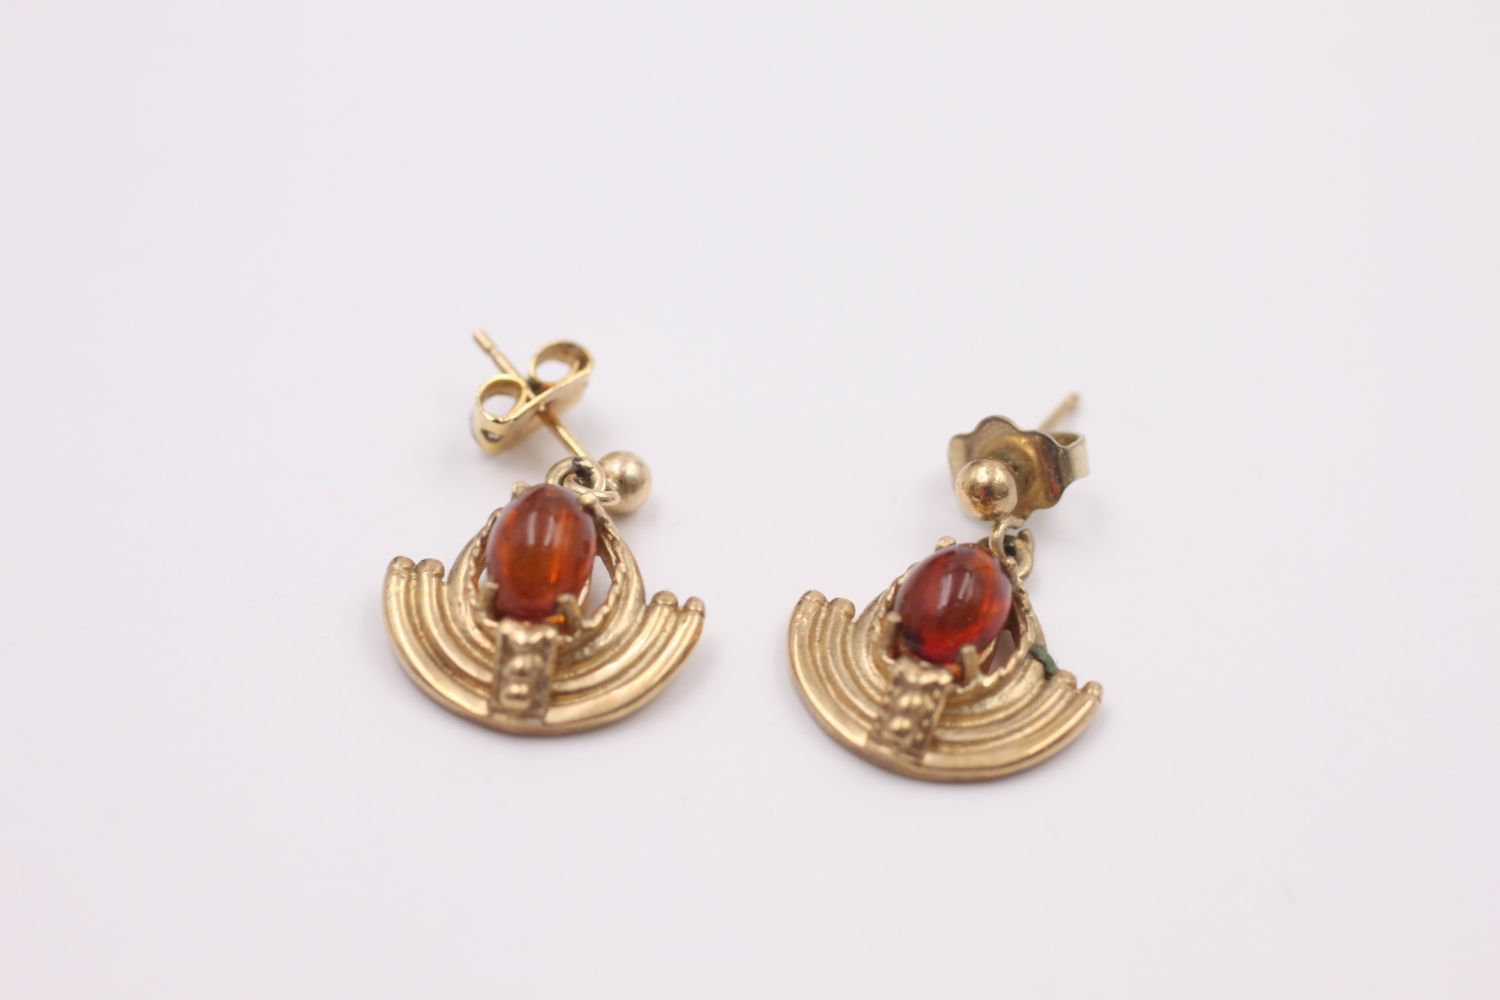 9ct gold vintage modernist design baltic amber drop earrings 4 grams gross